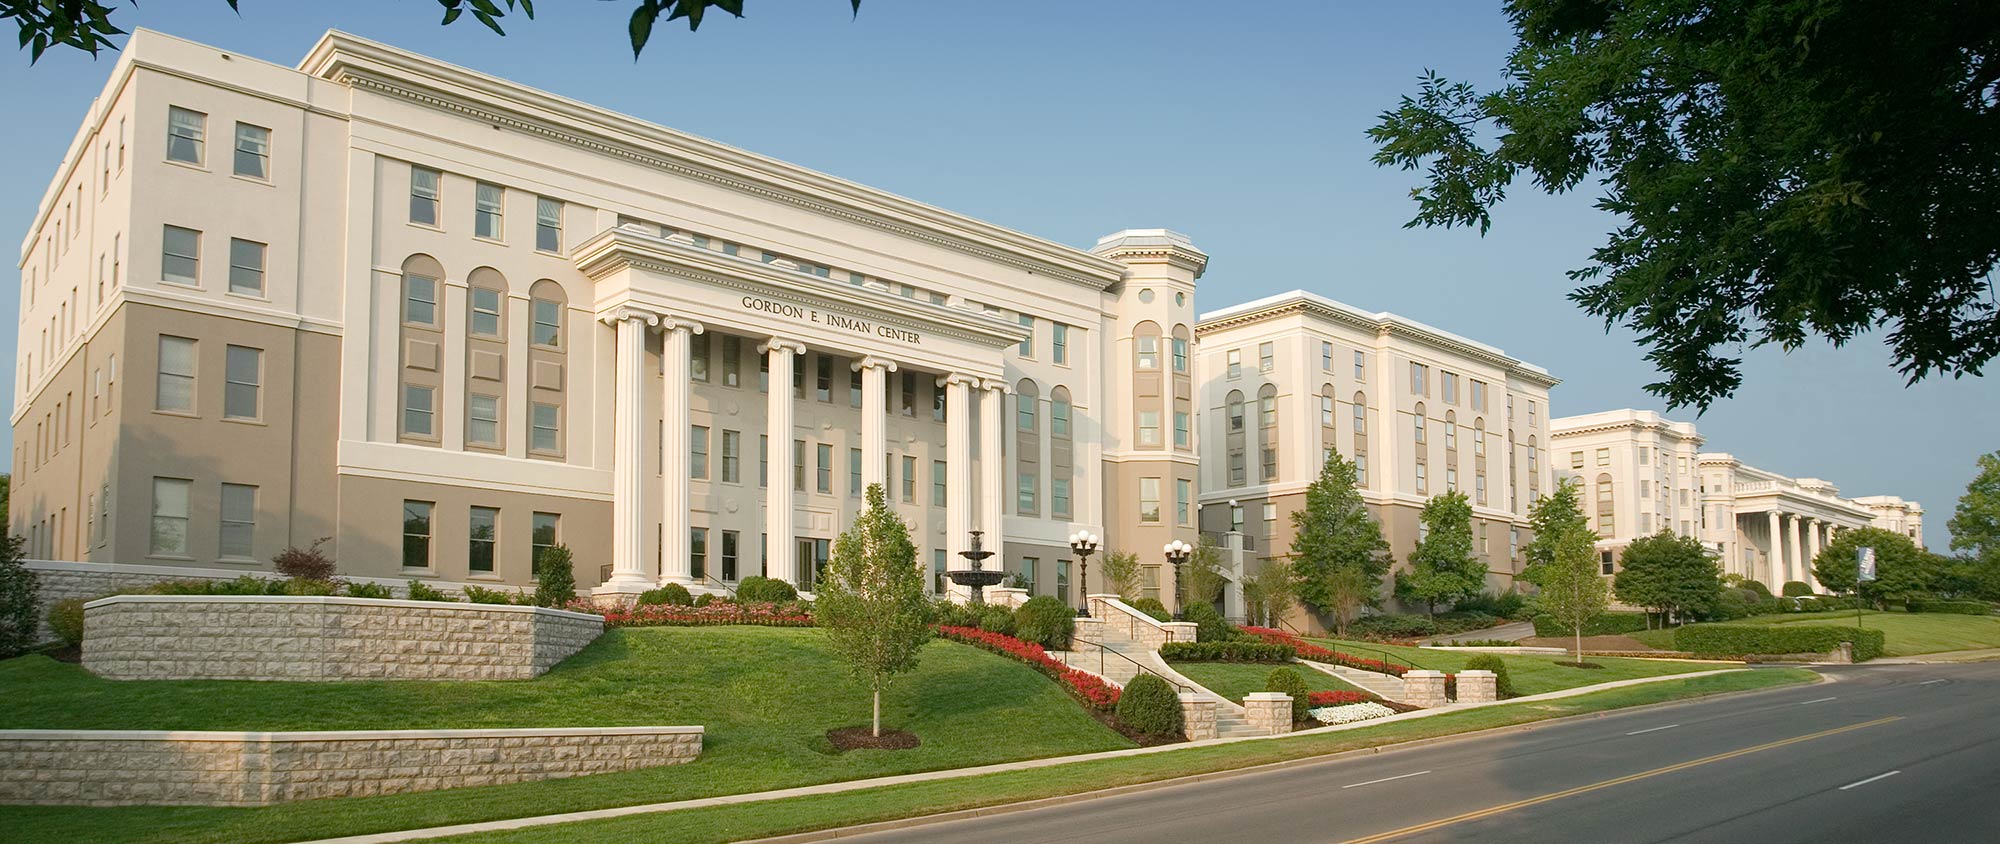 Belmont University, Gordon E. Inman Center – College of Health Sciences & Nursing